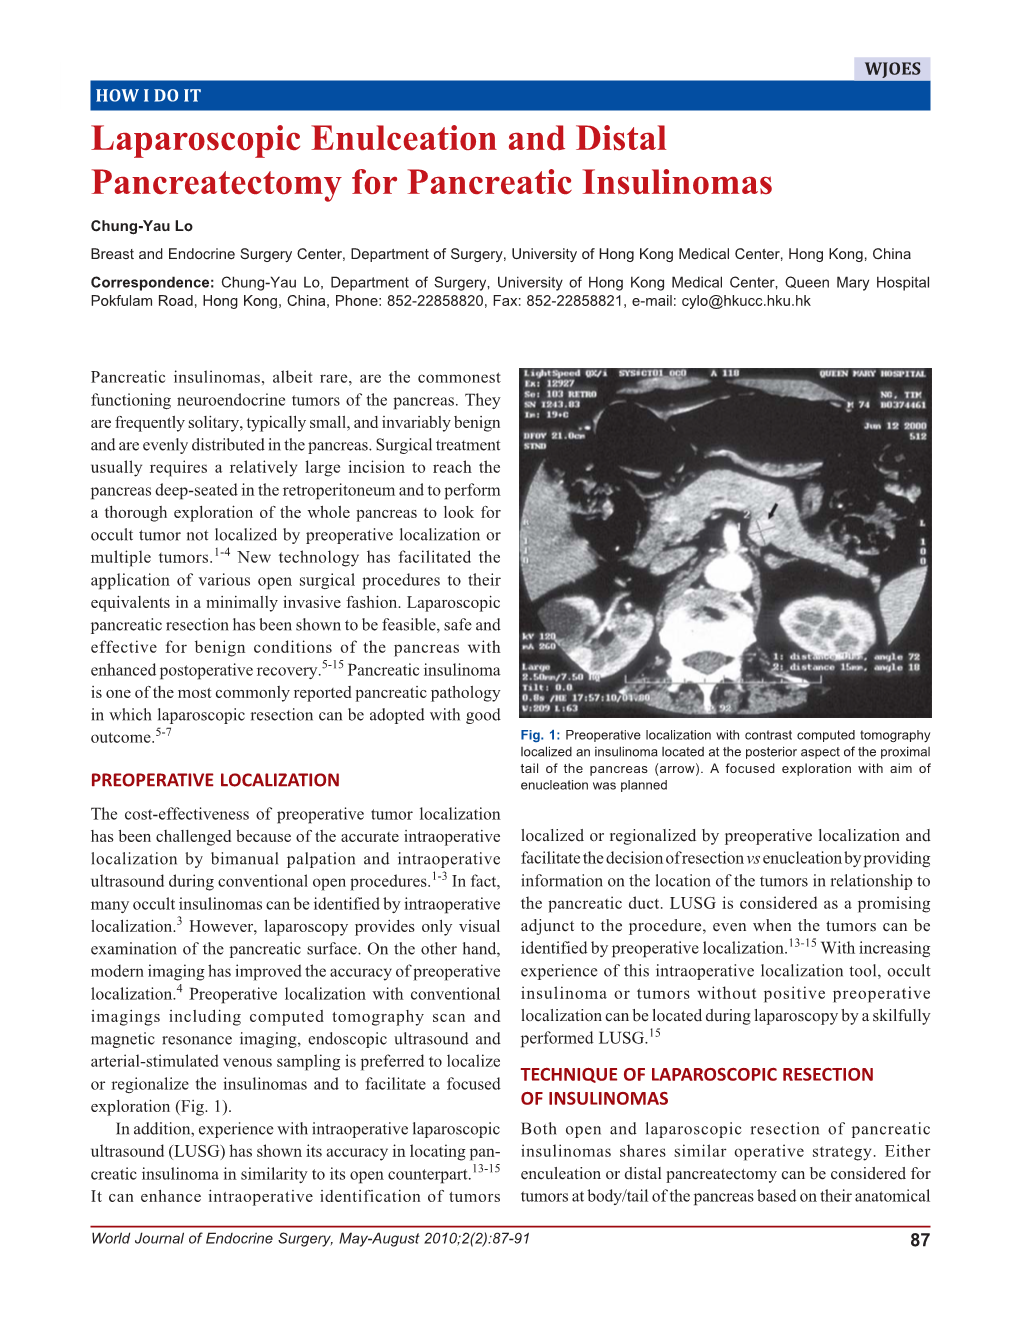 Laparoscopic Enulceation and Distal Pancreatectomy for Pancreatic Insulinomas Laparoscopic Enulceation and Distal Pancreatectomy for Pancreatic Insulinomas